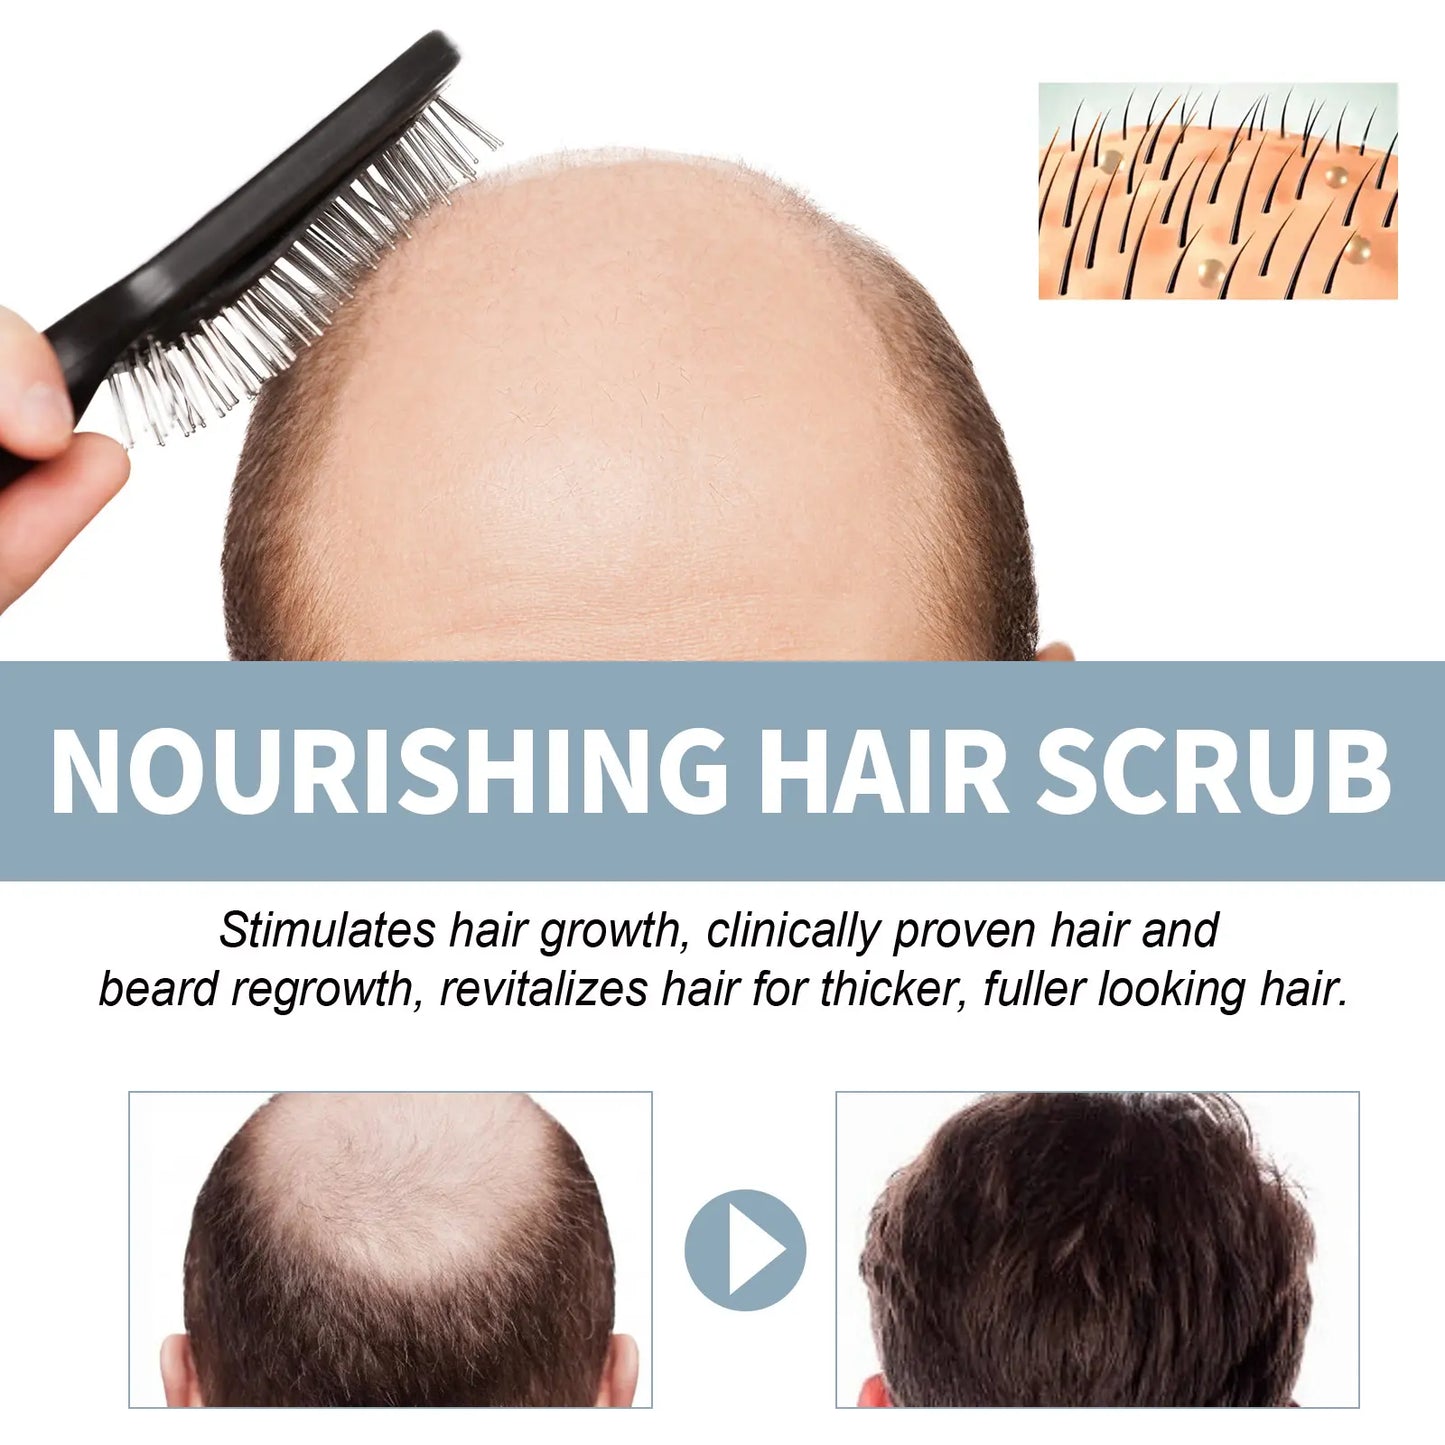 Sxcpouw™ Root Nourishing Hair Scrub🔥HOT SALE 48%🔥